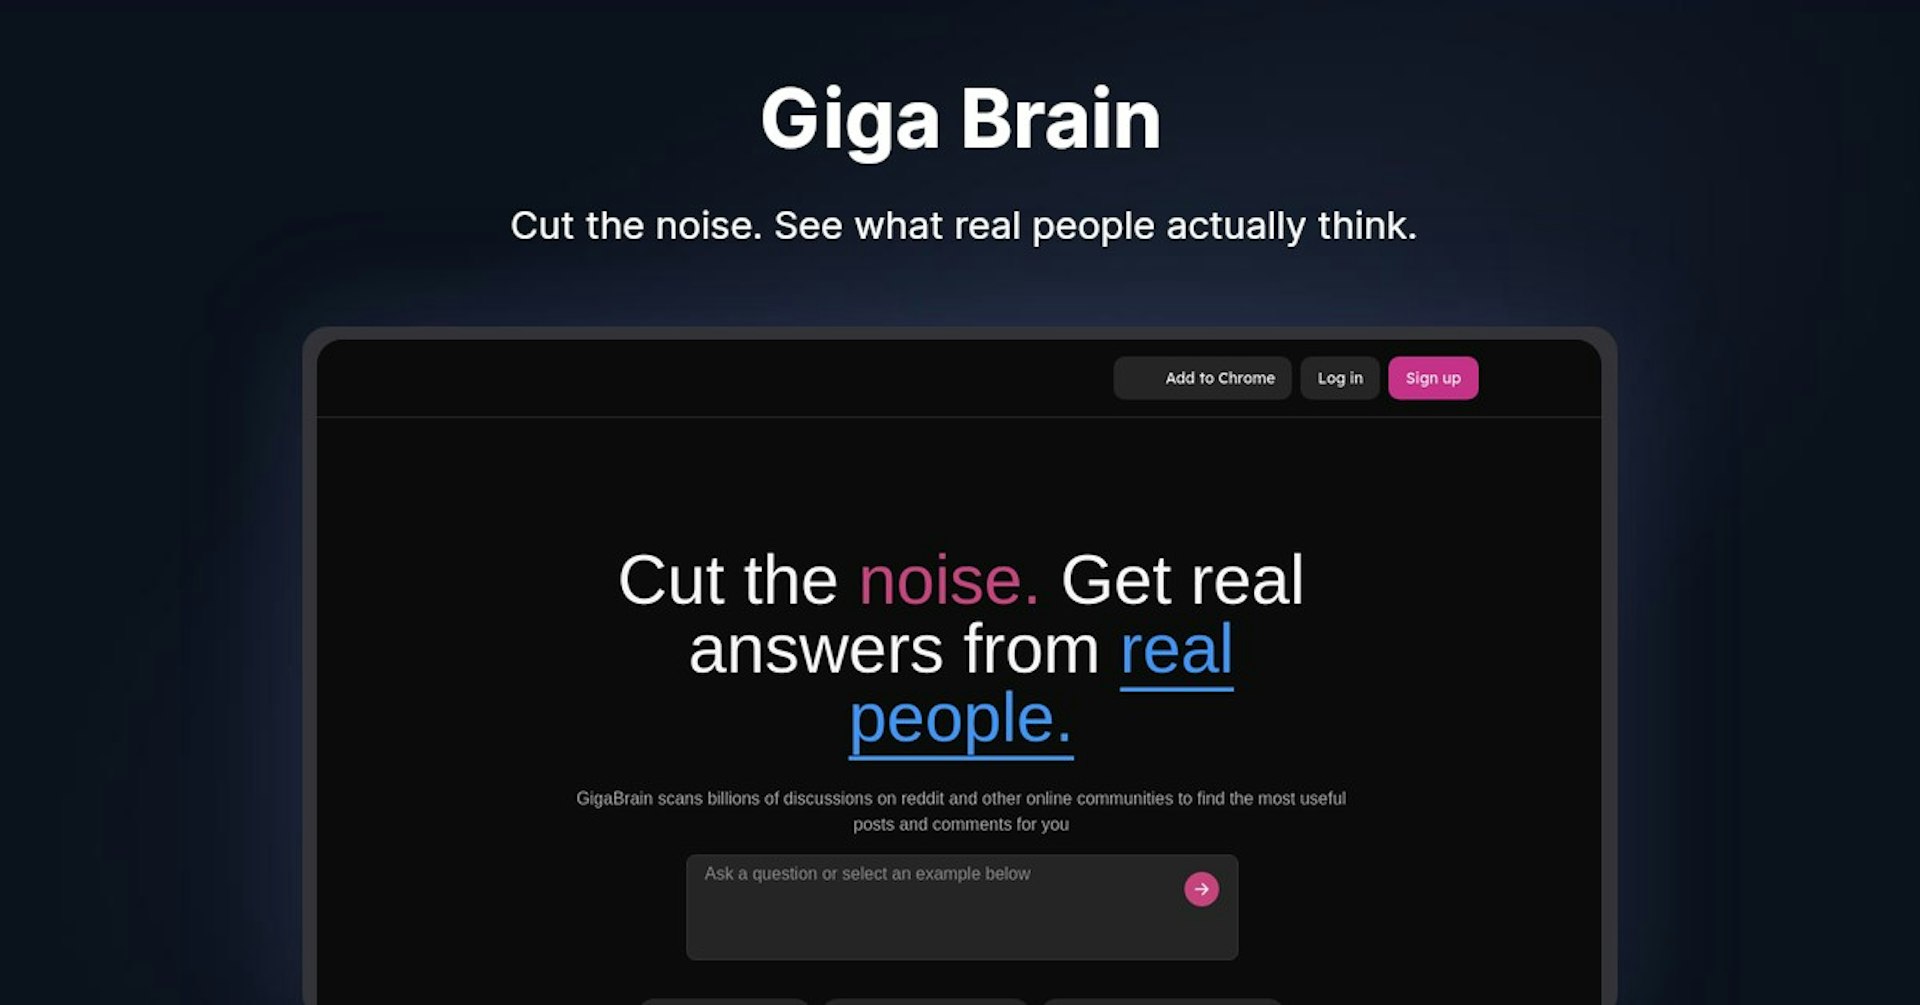 Giga Brain